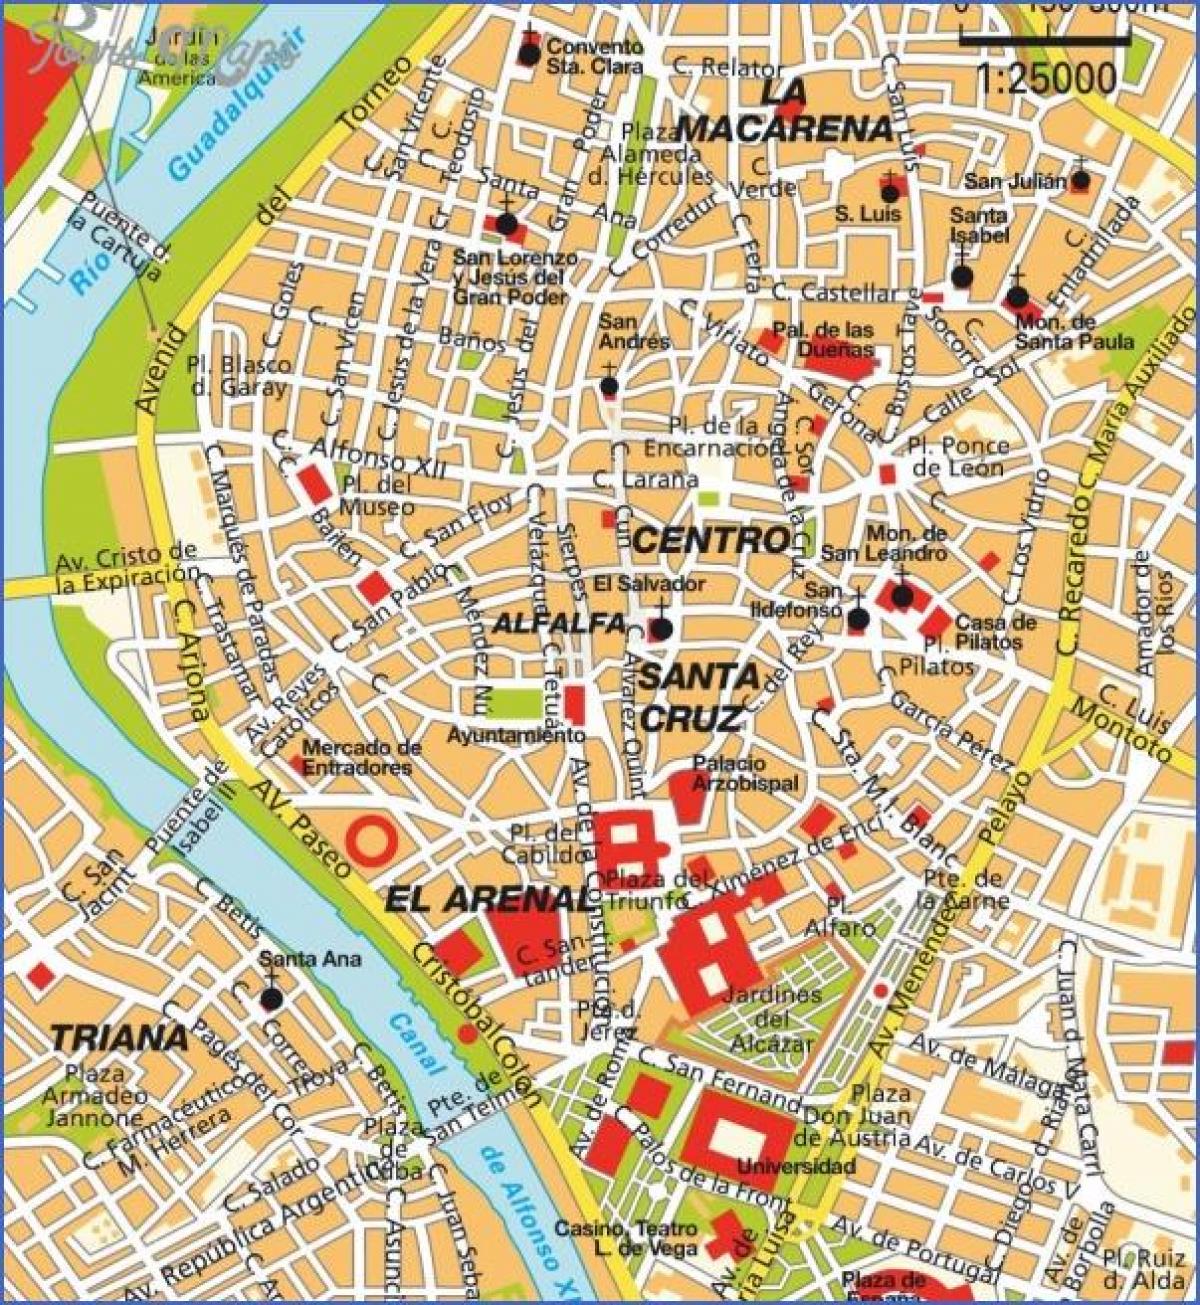 Sevilla toerisme-aantreklikhede kaart